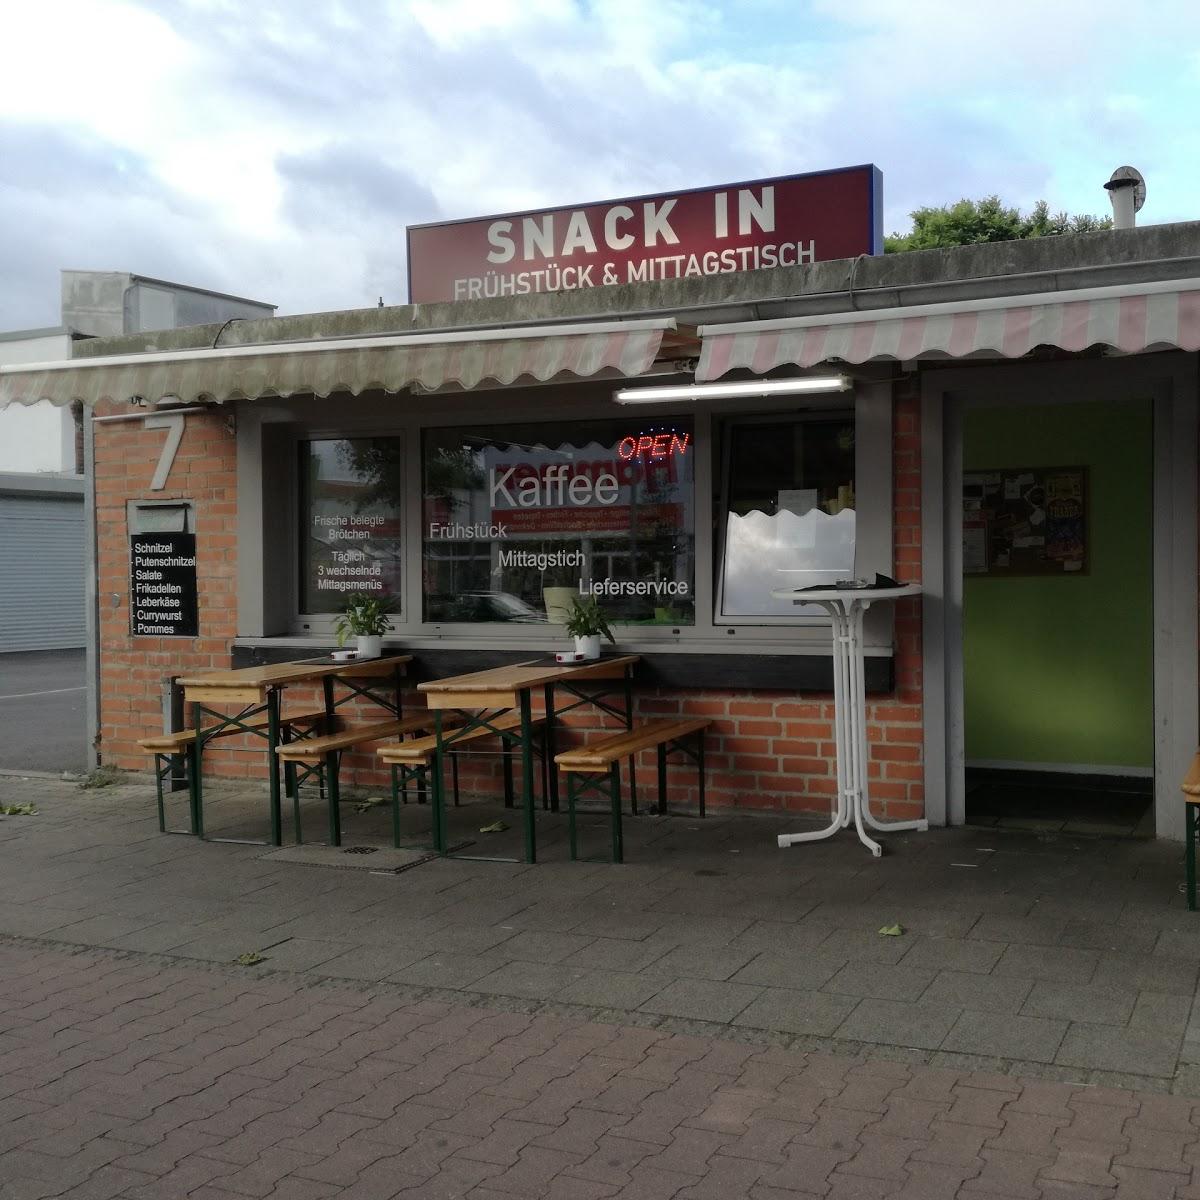 Restaurant "Snack Inn" in Düsseldorf